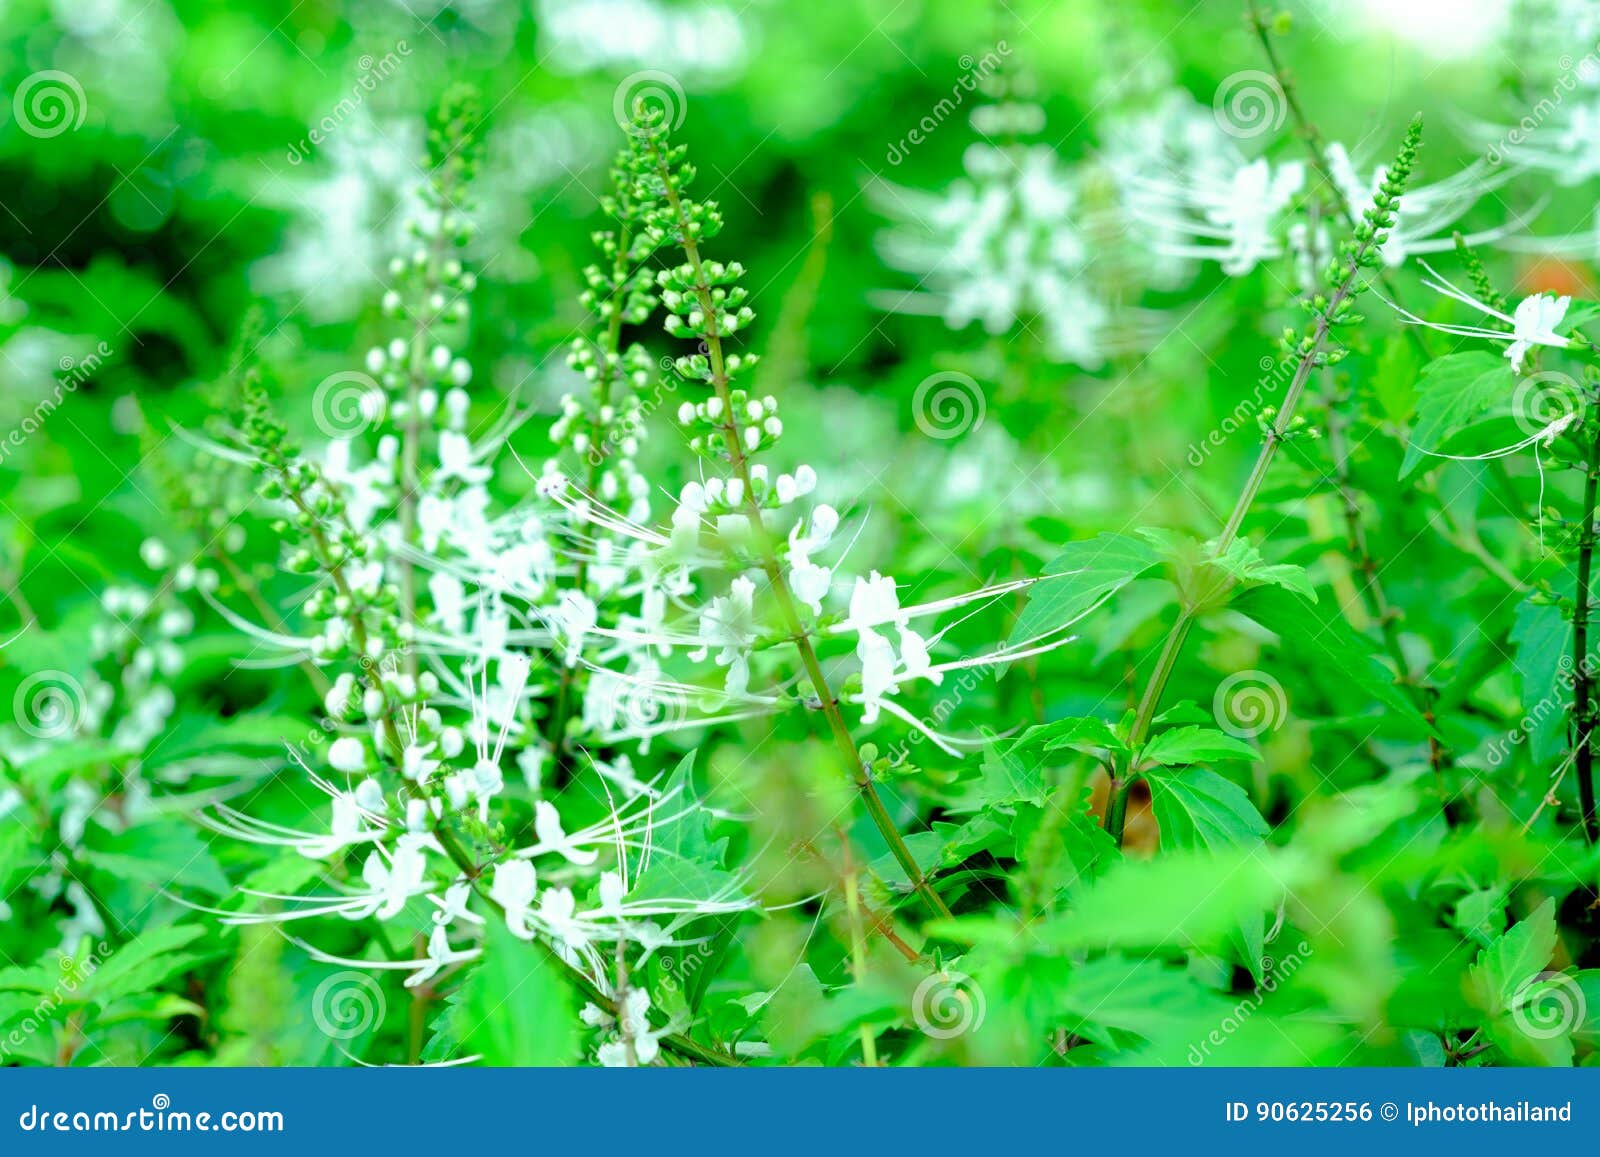 20 seeds Kidney tea Orthosiphon stamineus Benth Thailand herbs